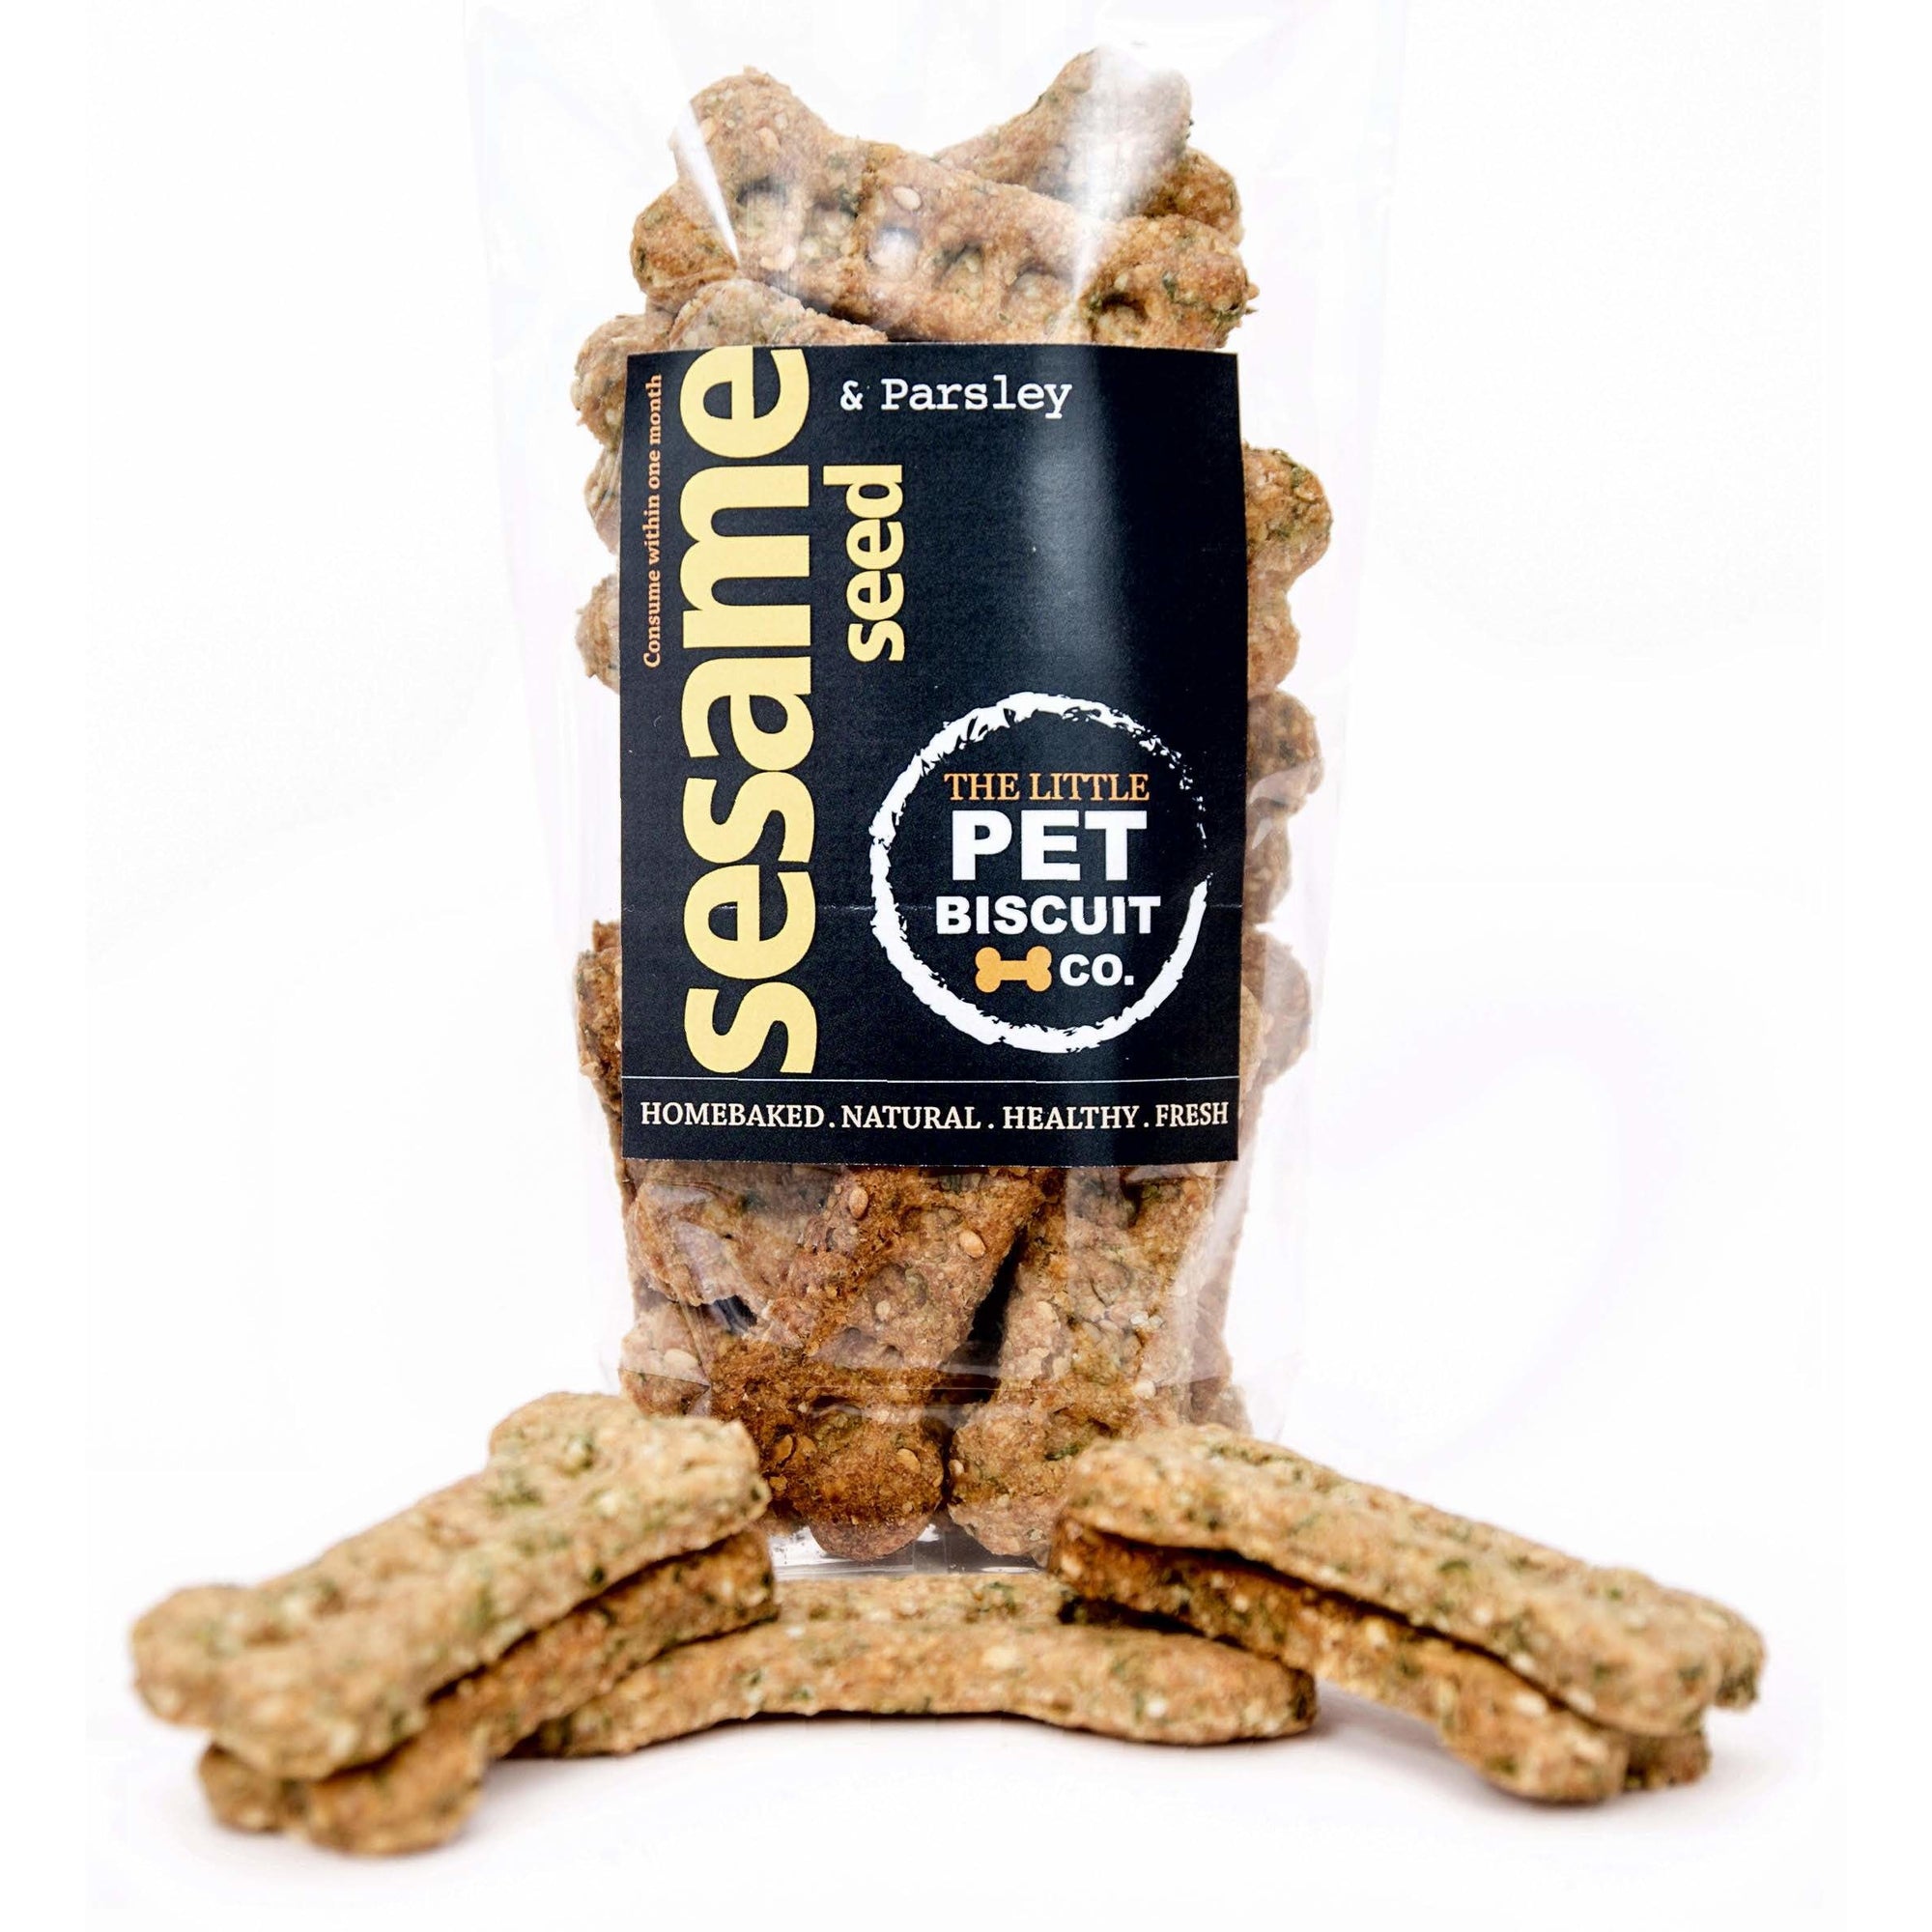 Sesame & Parsley bite size dog biscuits